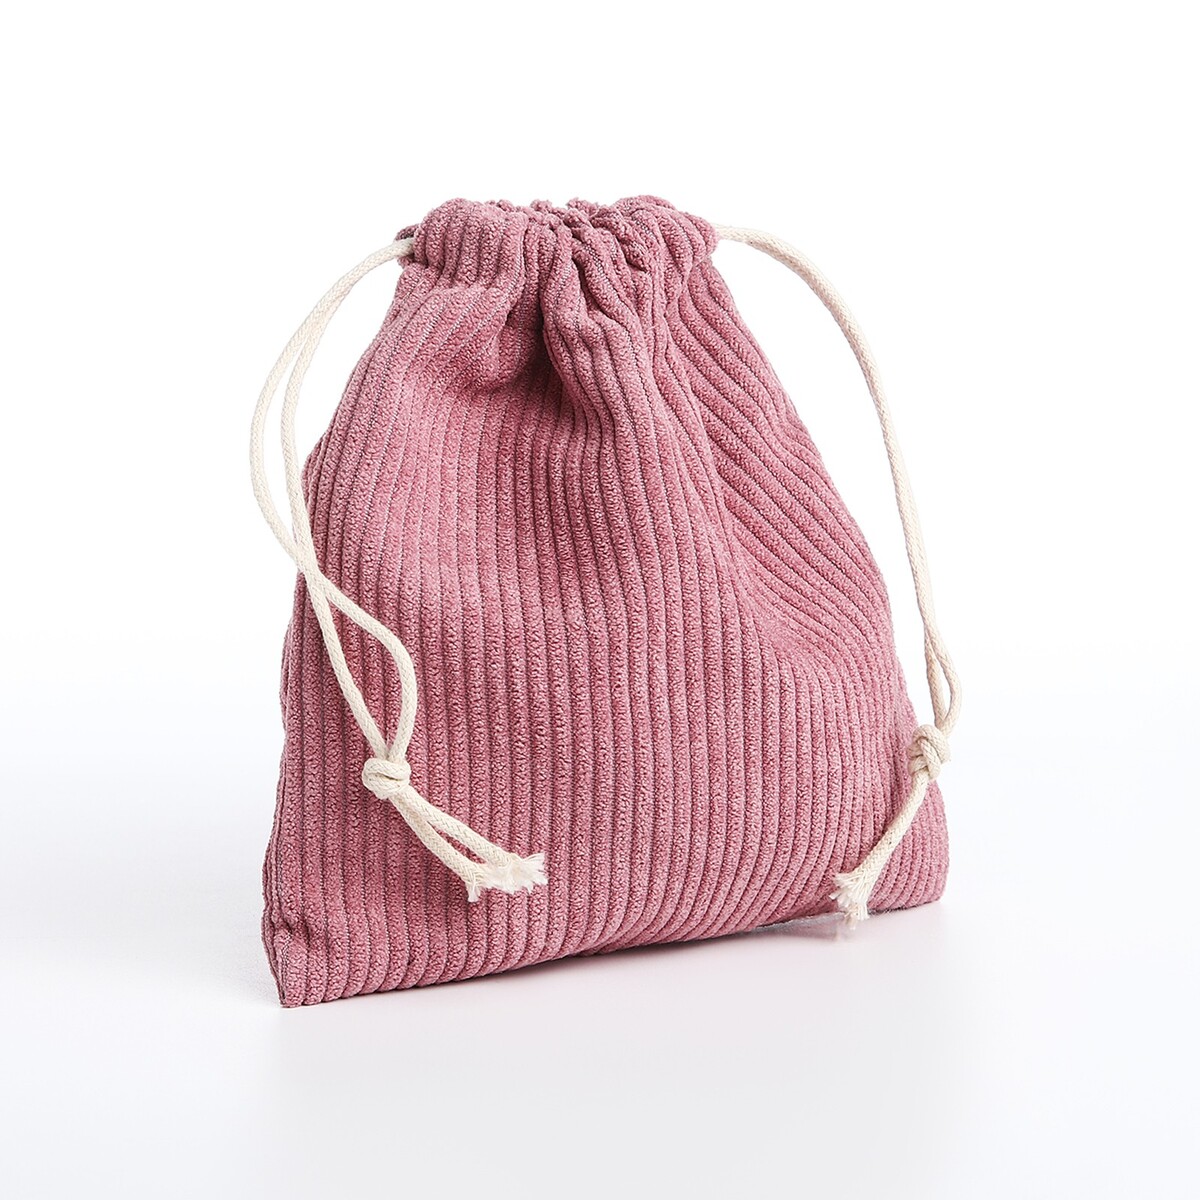 Косметичка - мешок с завязками, цвет сиренево-розовый сумка мешок на молнии розовый